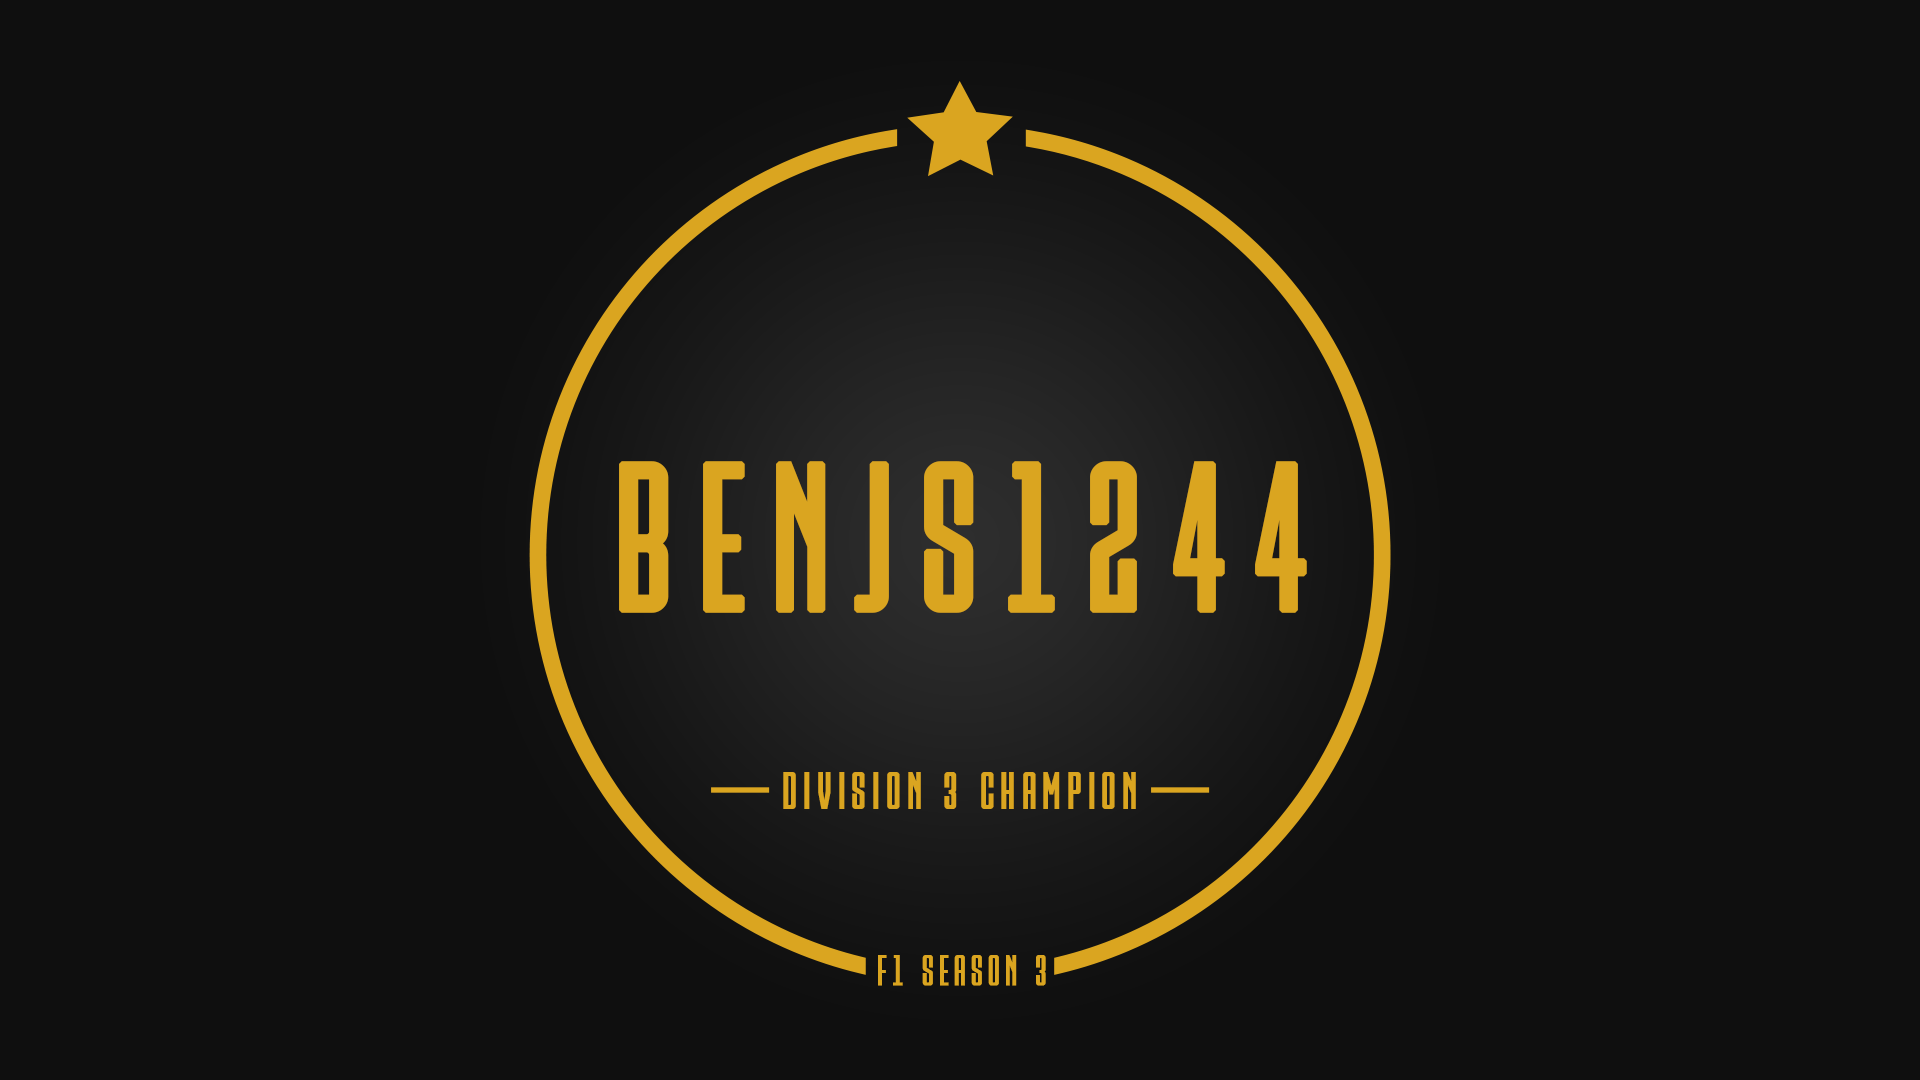 Division 3 Champion - BenJS1244